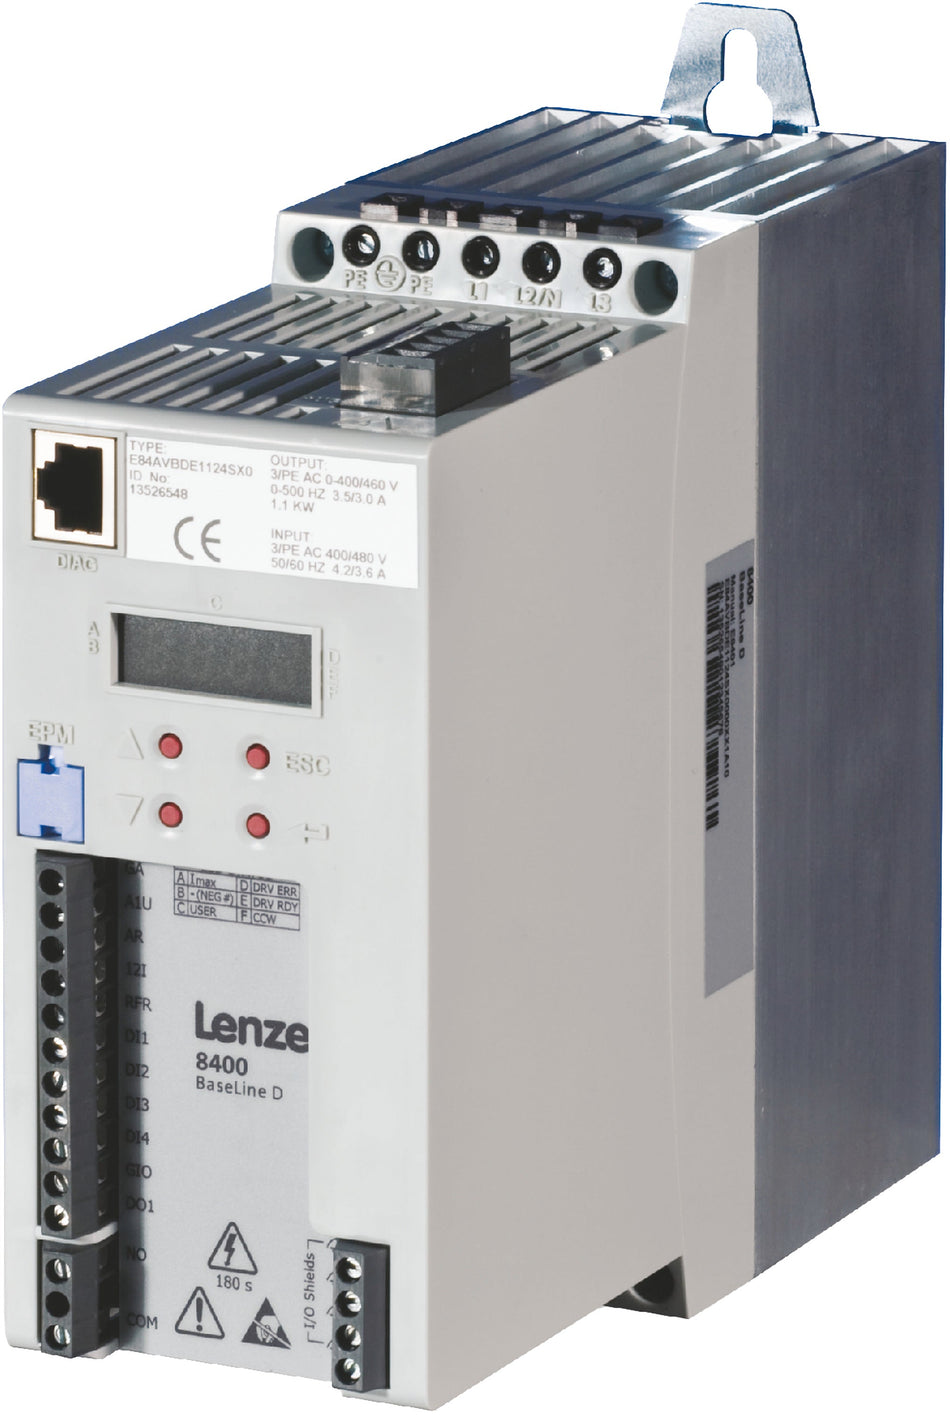 Lenze Inverter Drives 8400 BaseLine -  E84AVBCE1122SX0XX3A34 1.1 kW